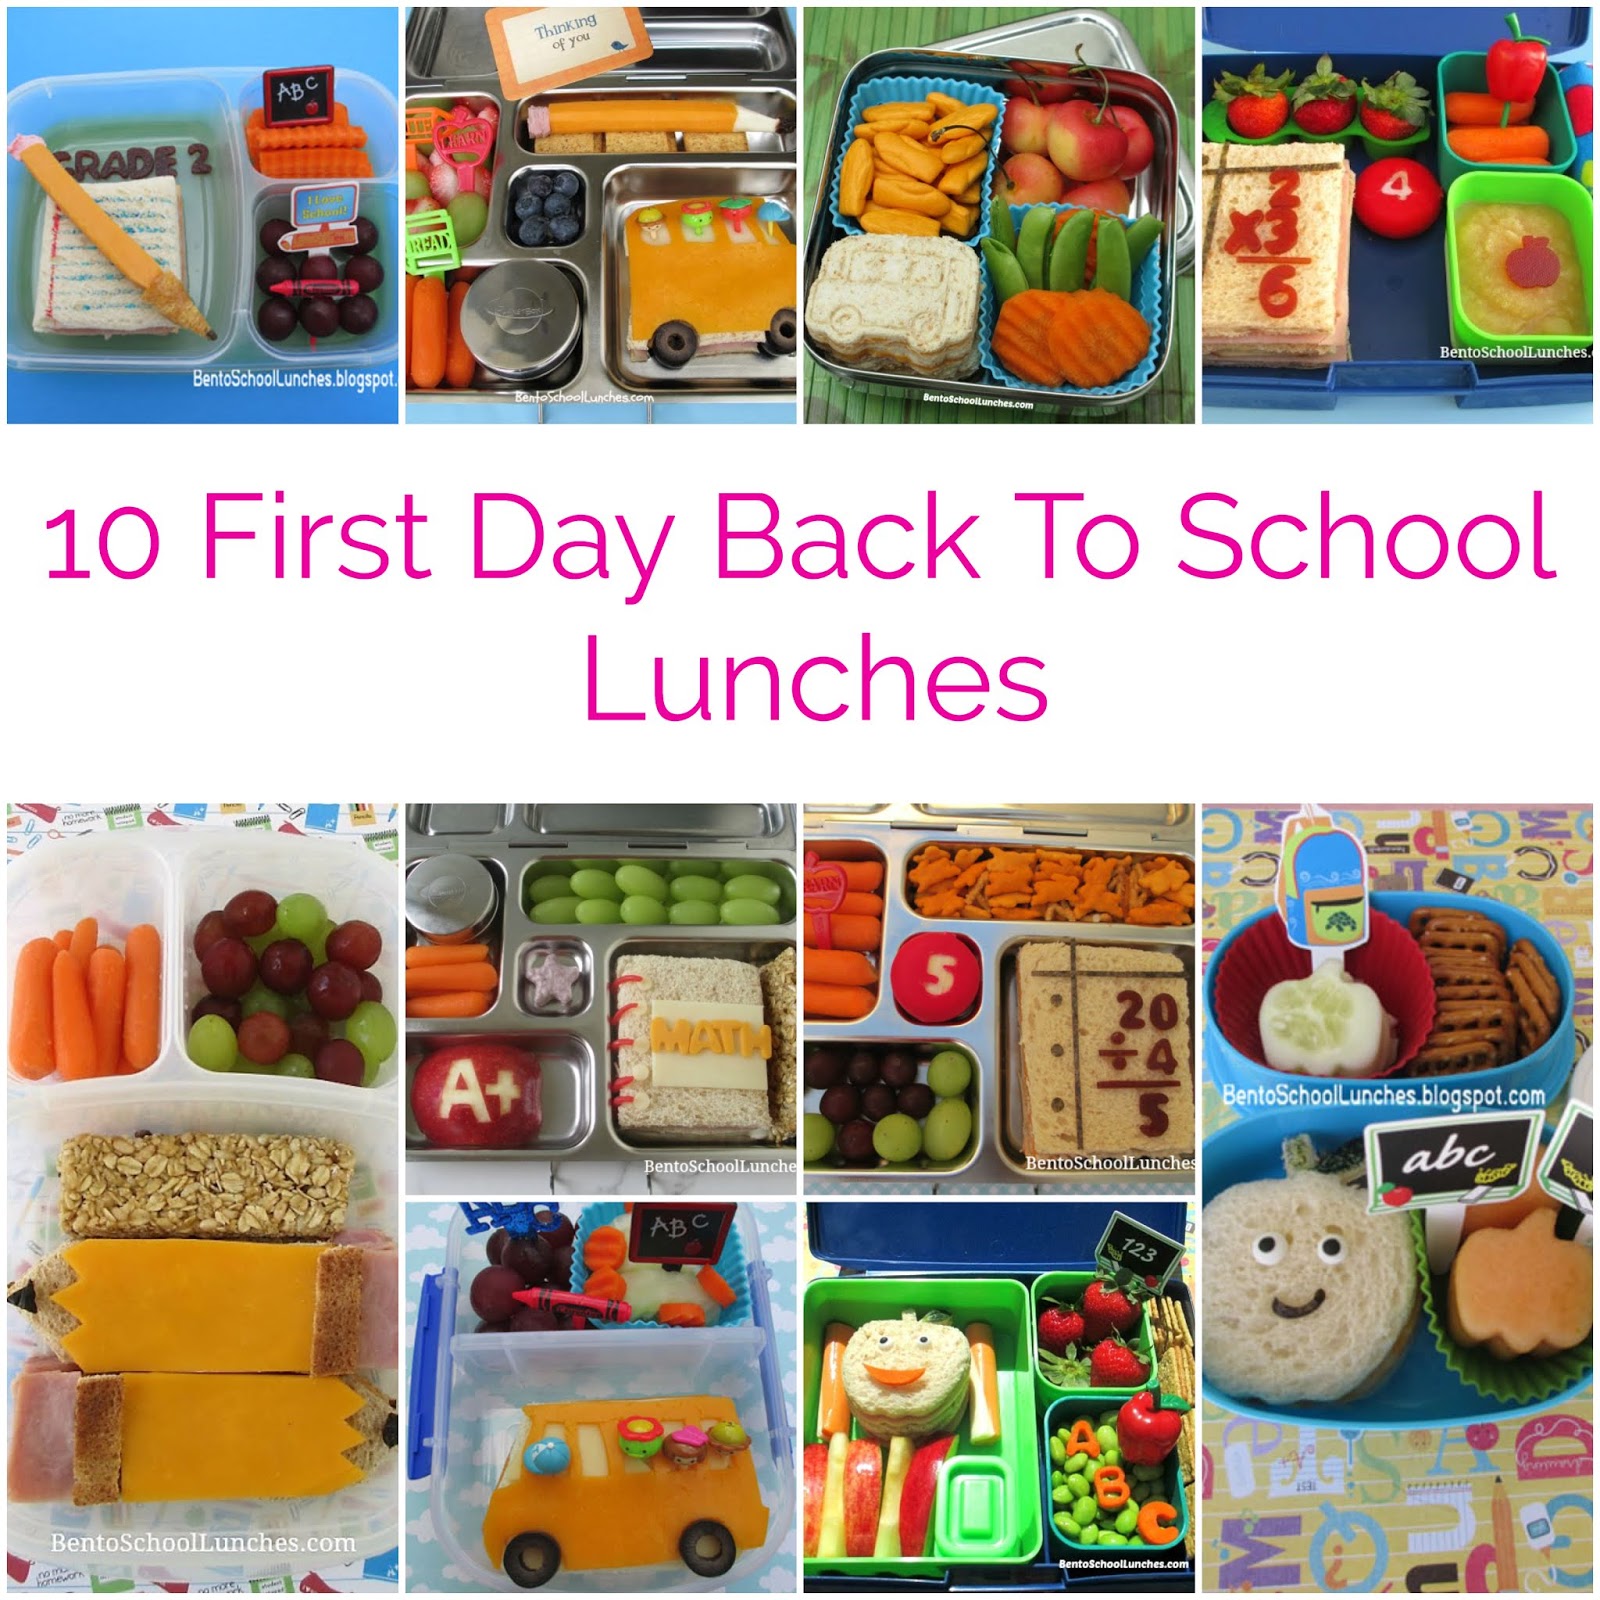 Bento School Lunches